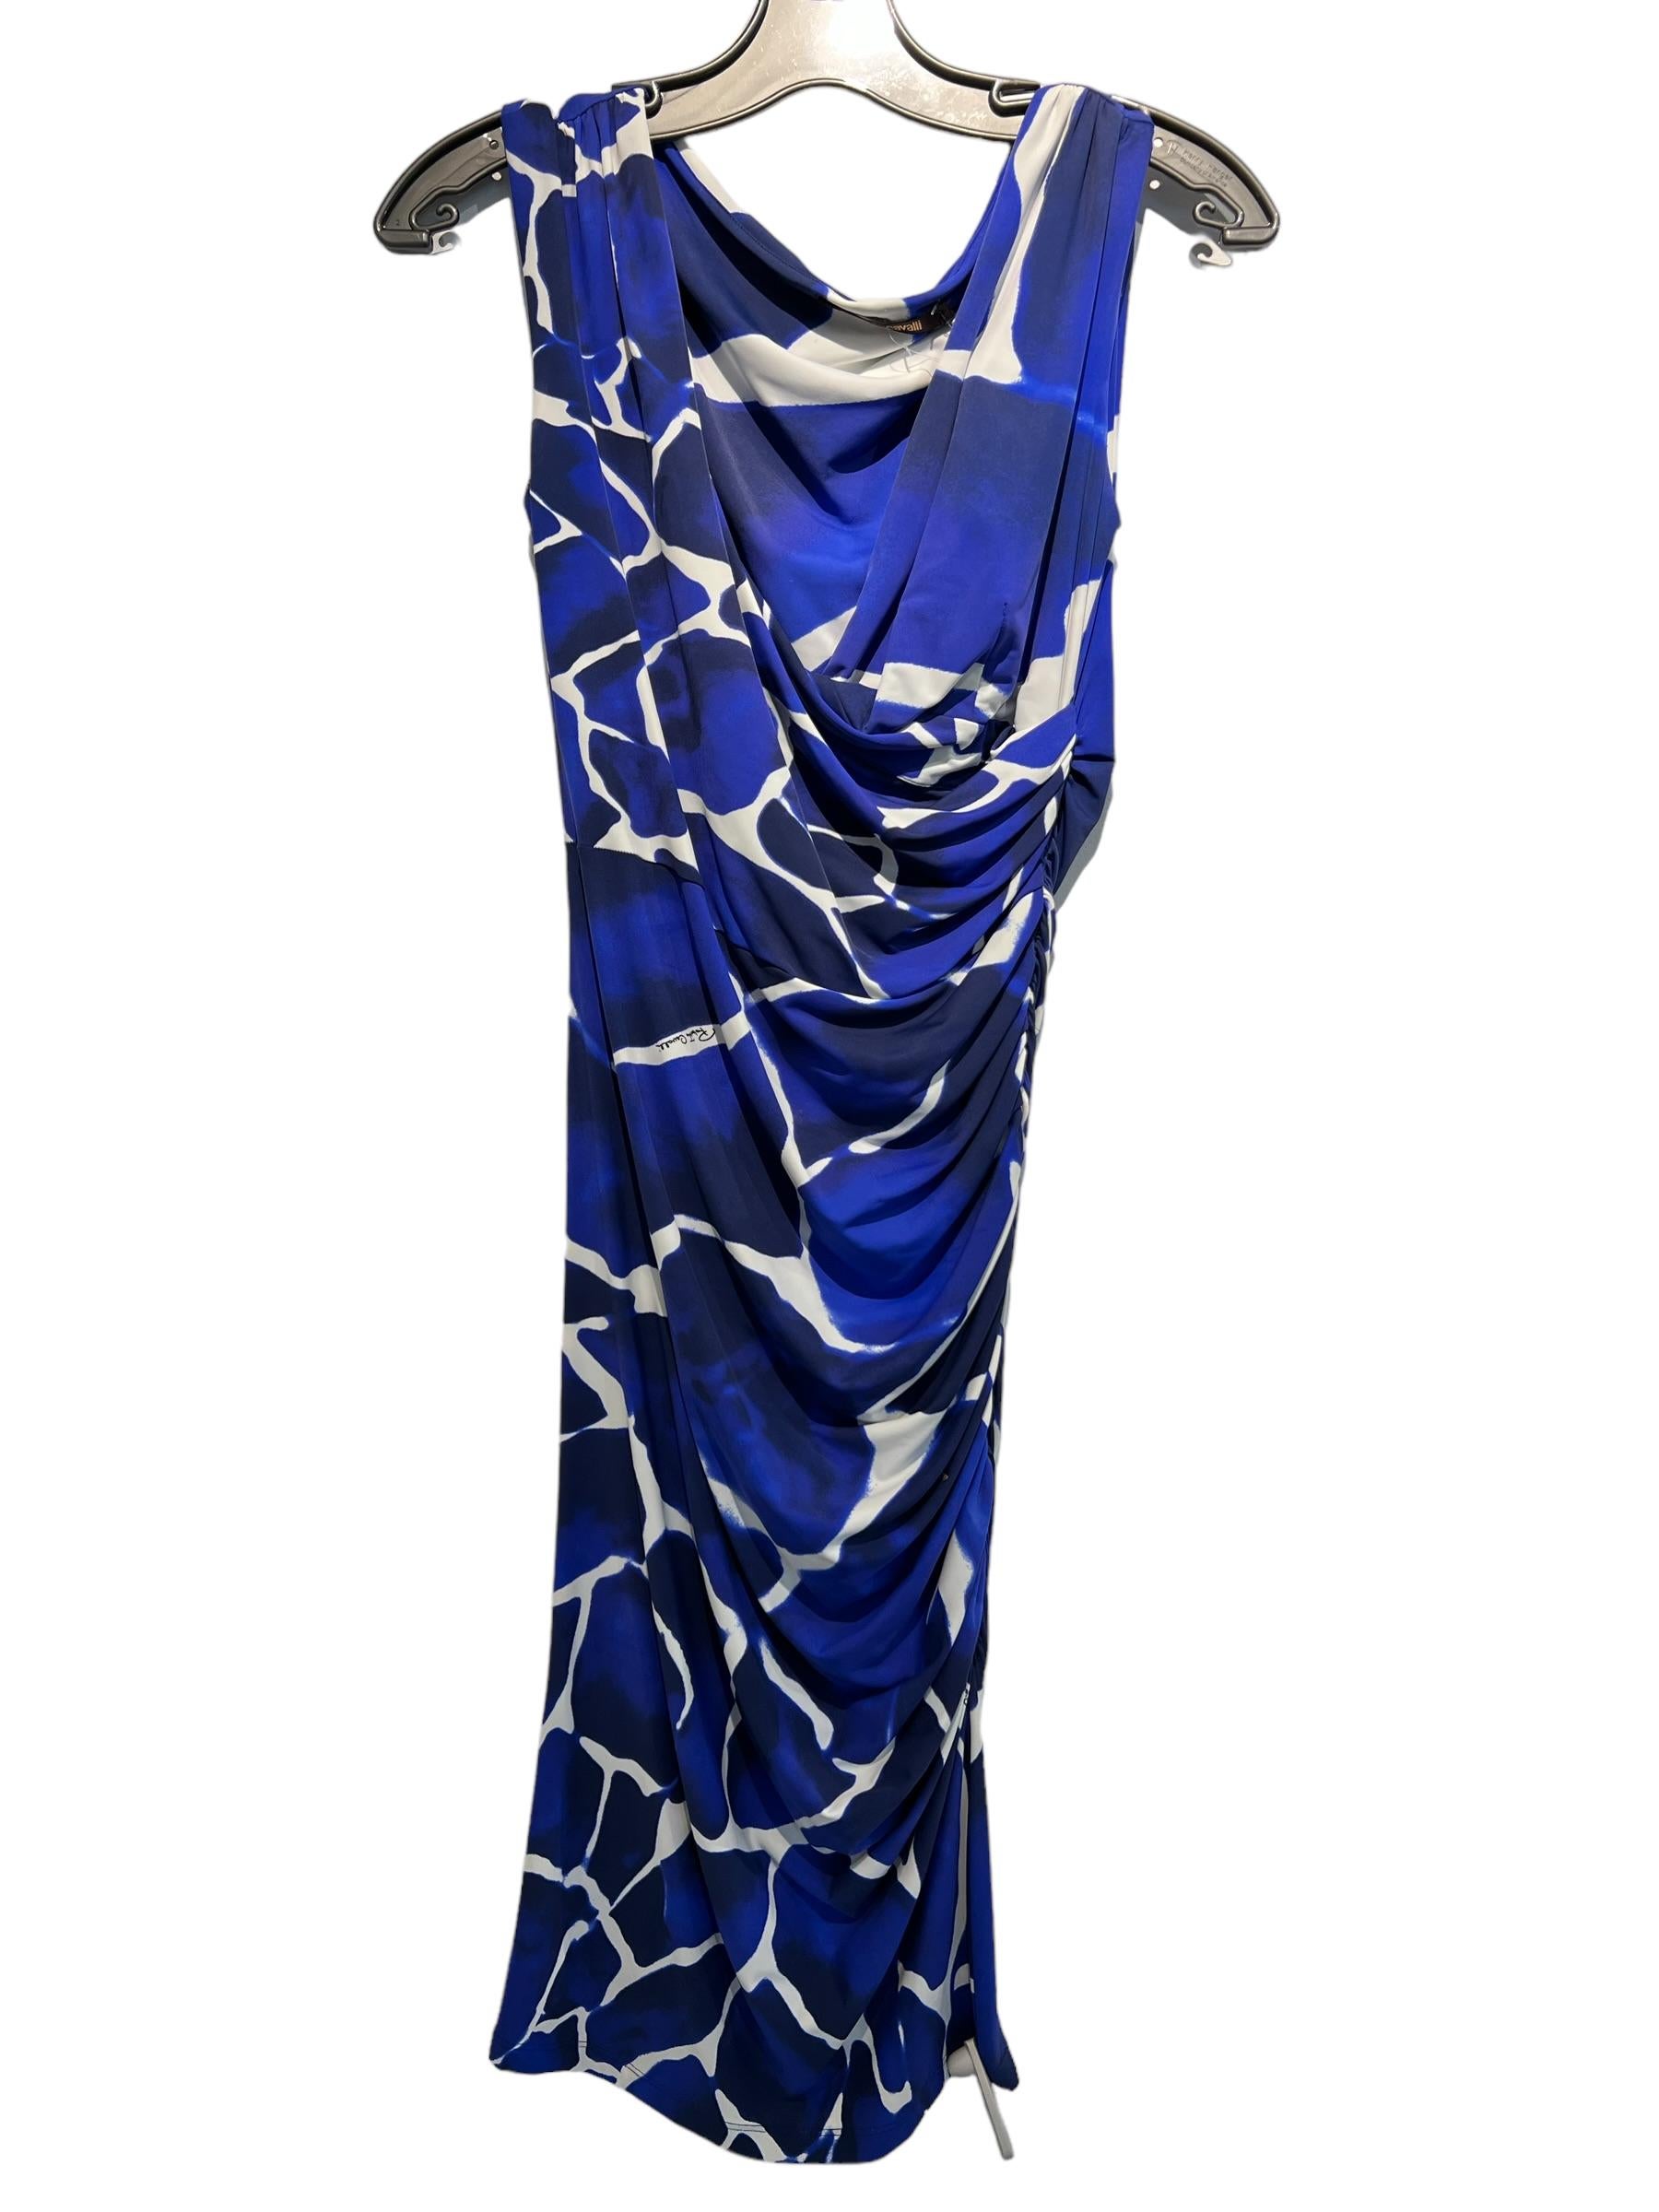 Roberto Cavalli Sheath Dress, Blue Printed, Sleeveless with V-Neck